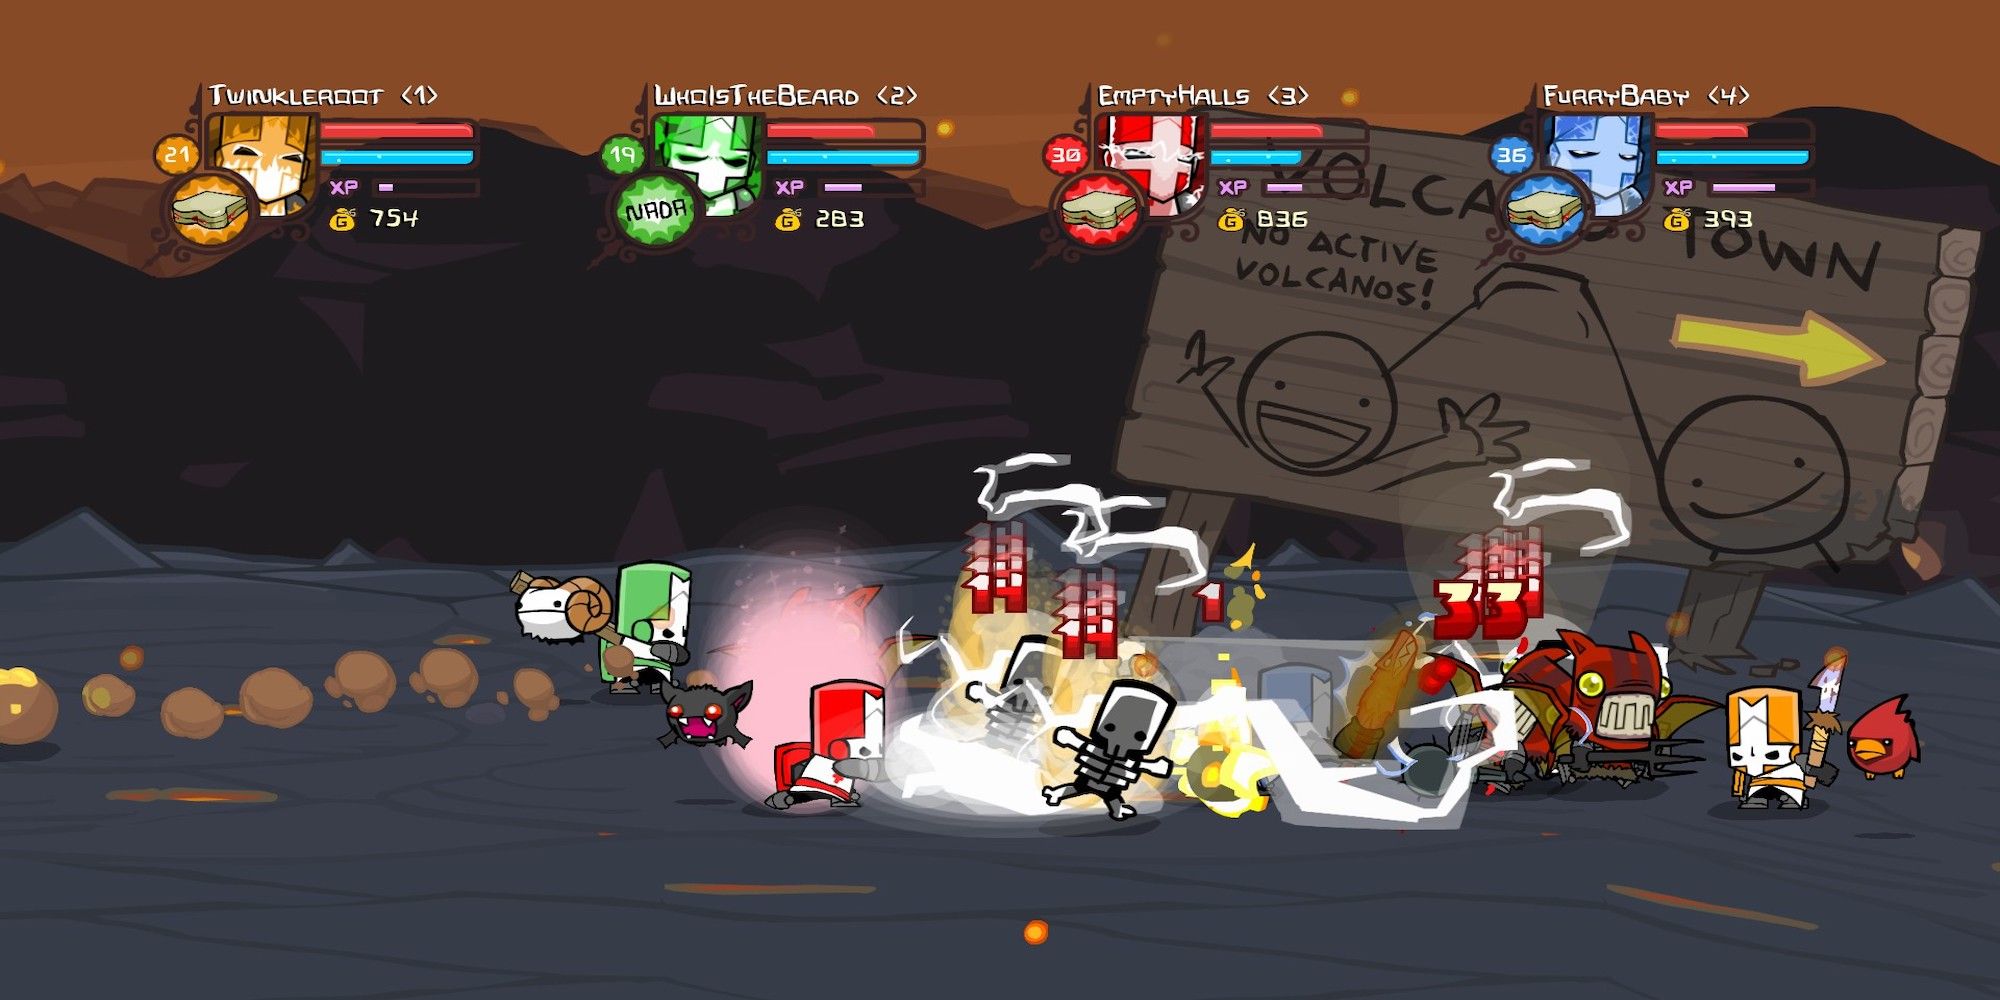 Fighting enemies in Castle Crashers